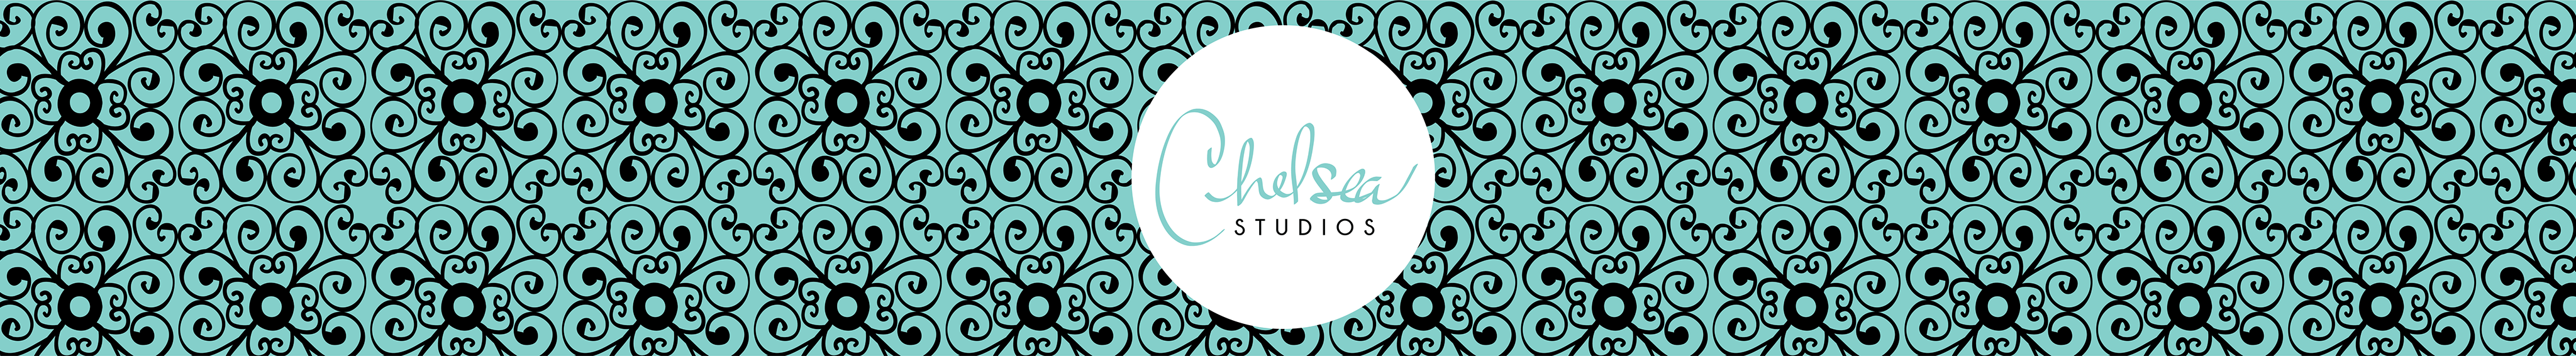 Chelsea Studios